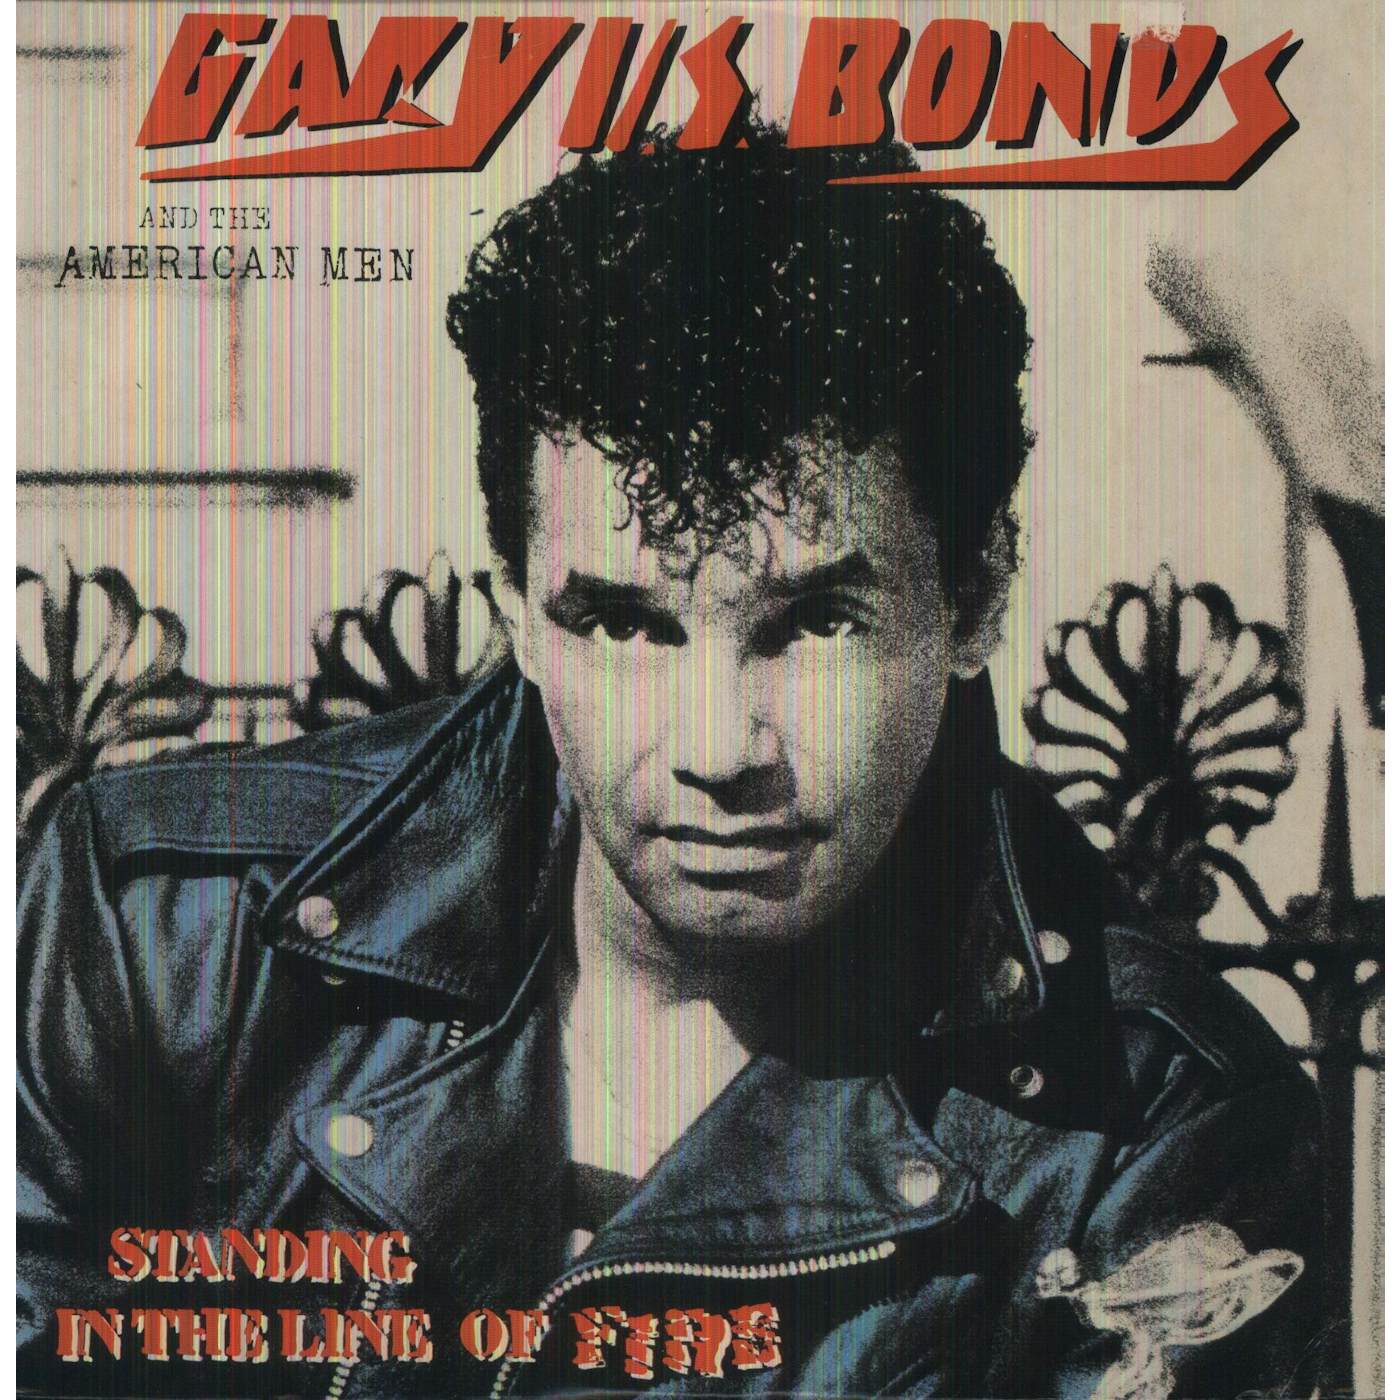 Gary U.S. Bonds Standing In The Line Of Fire Vinyl Record